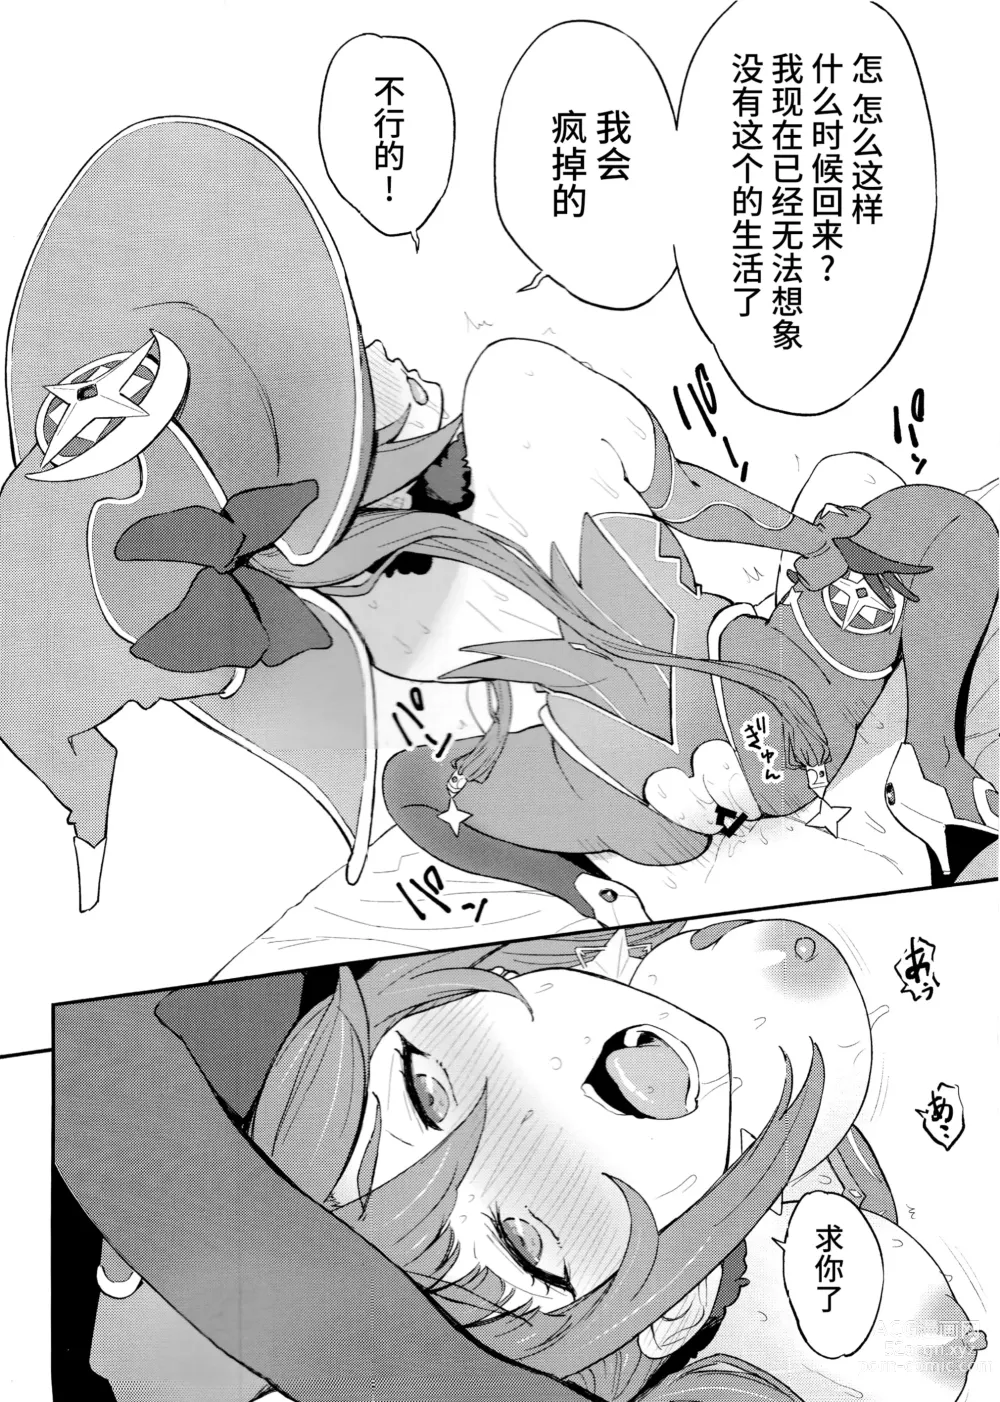 Page 7 of doujinshi Mona-Gete 3